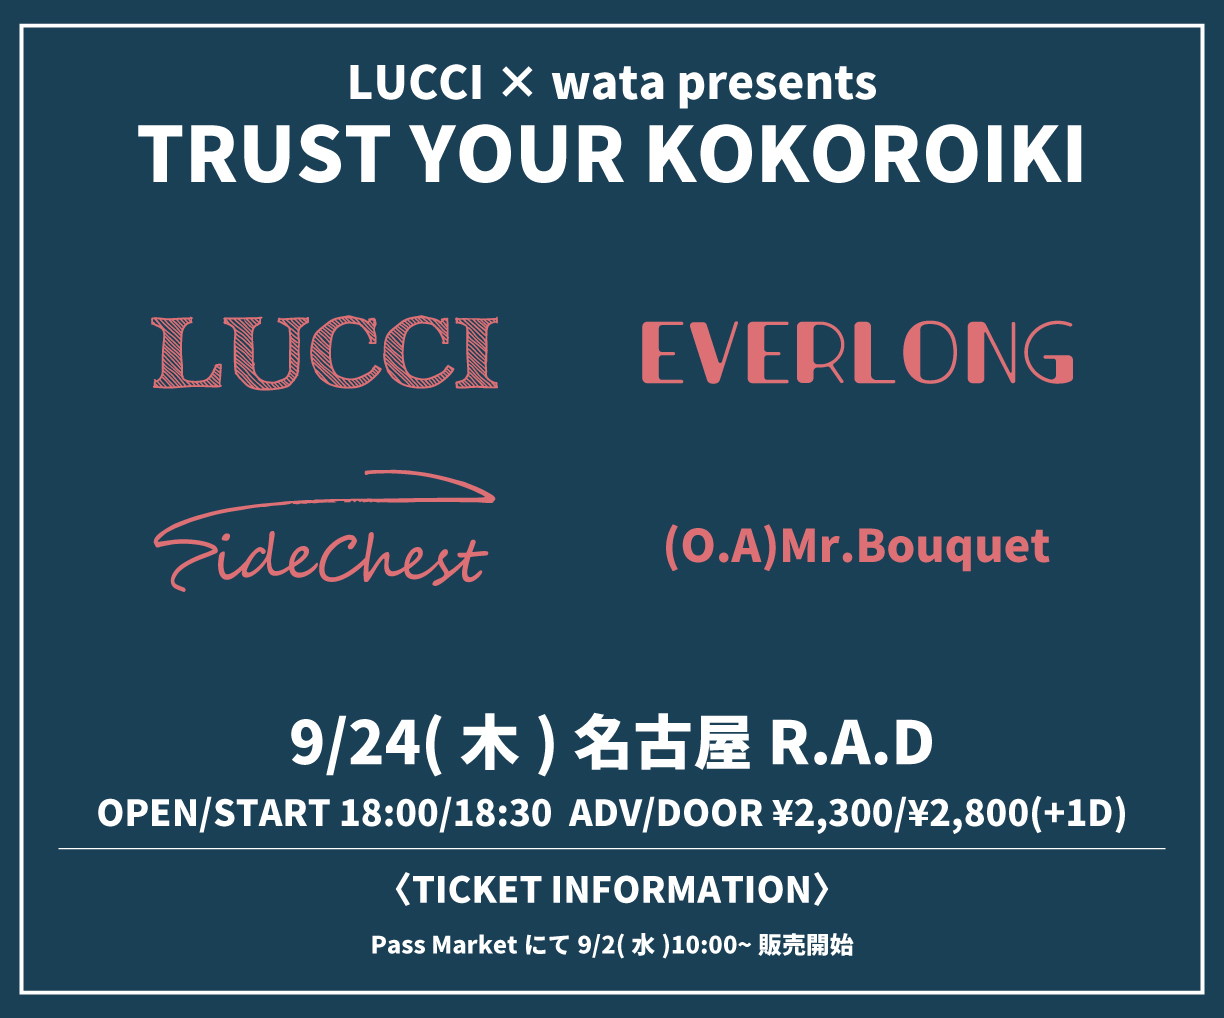 LUCCI × wata presents TRUST YOUR KOKOROIKI